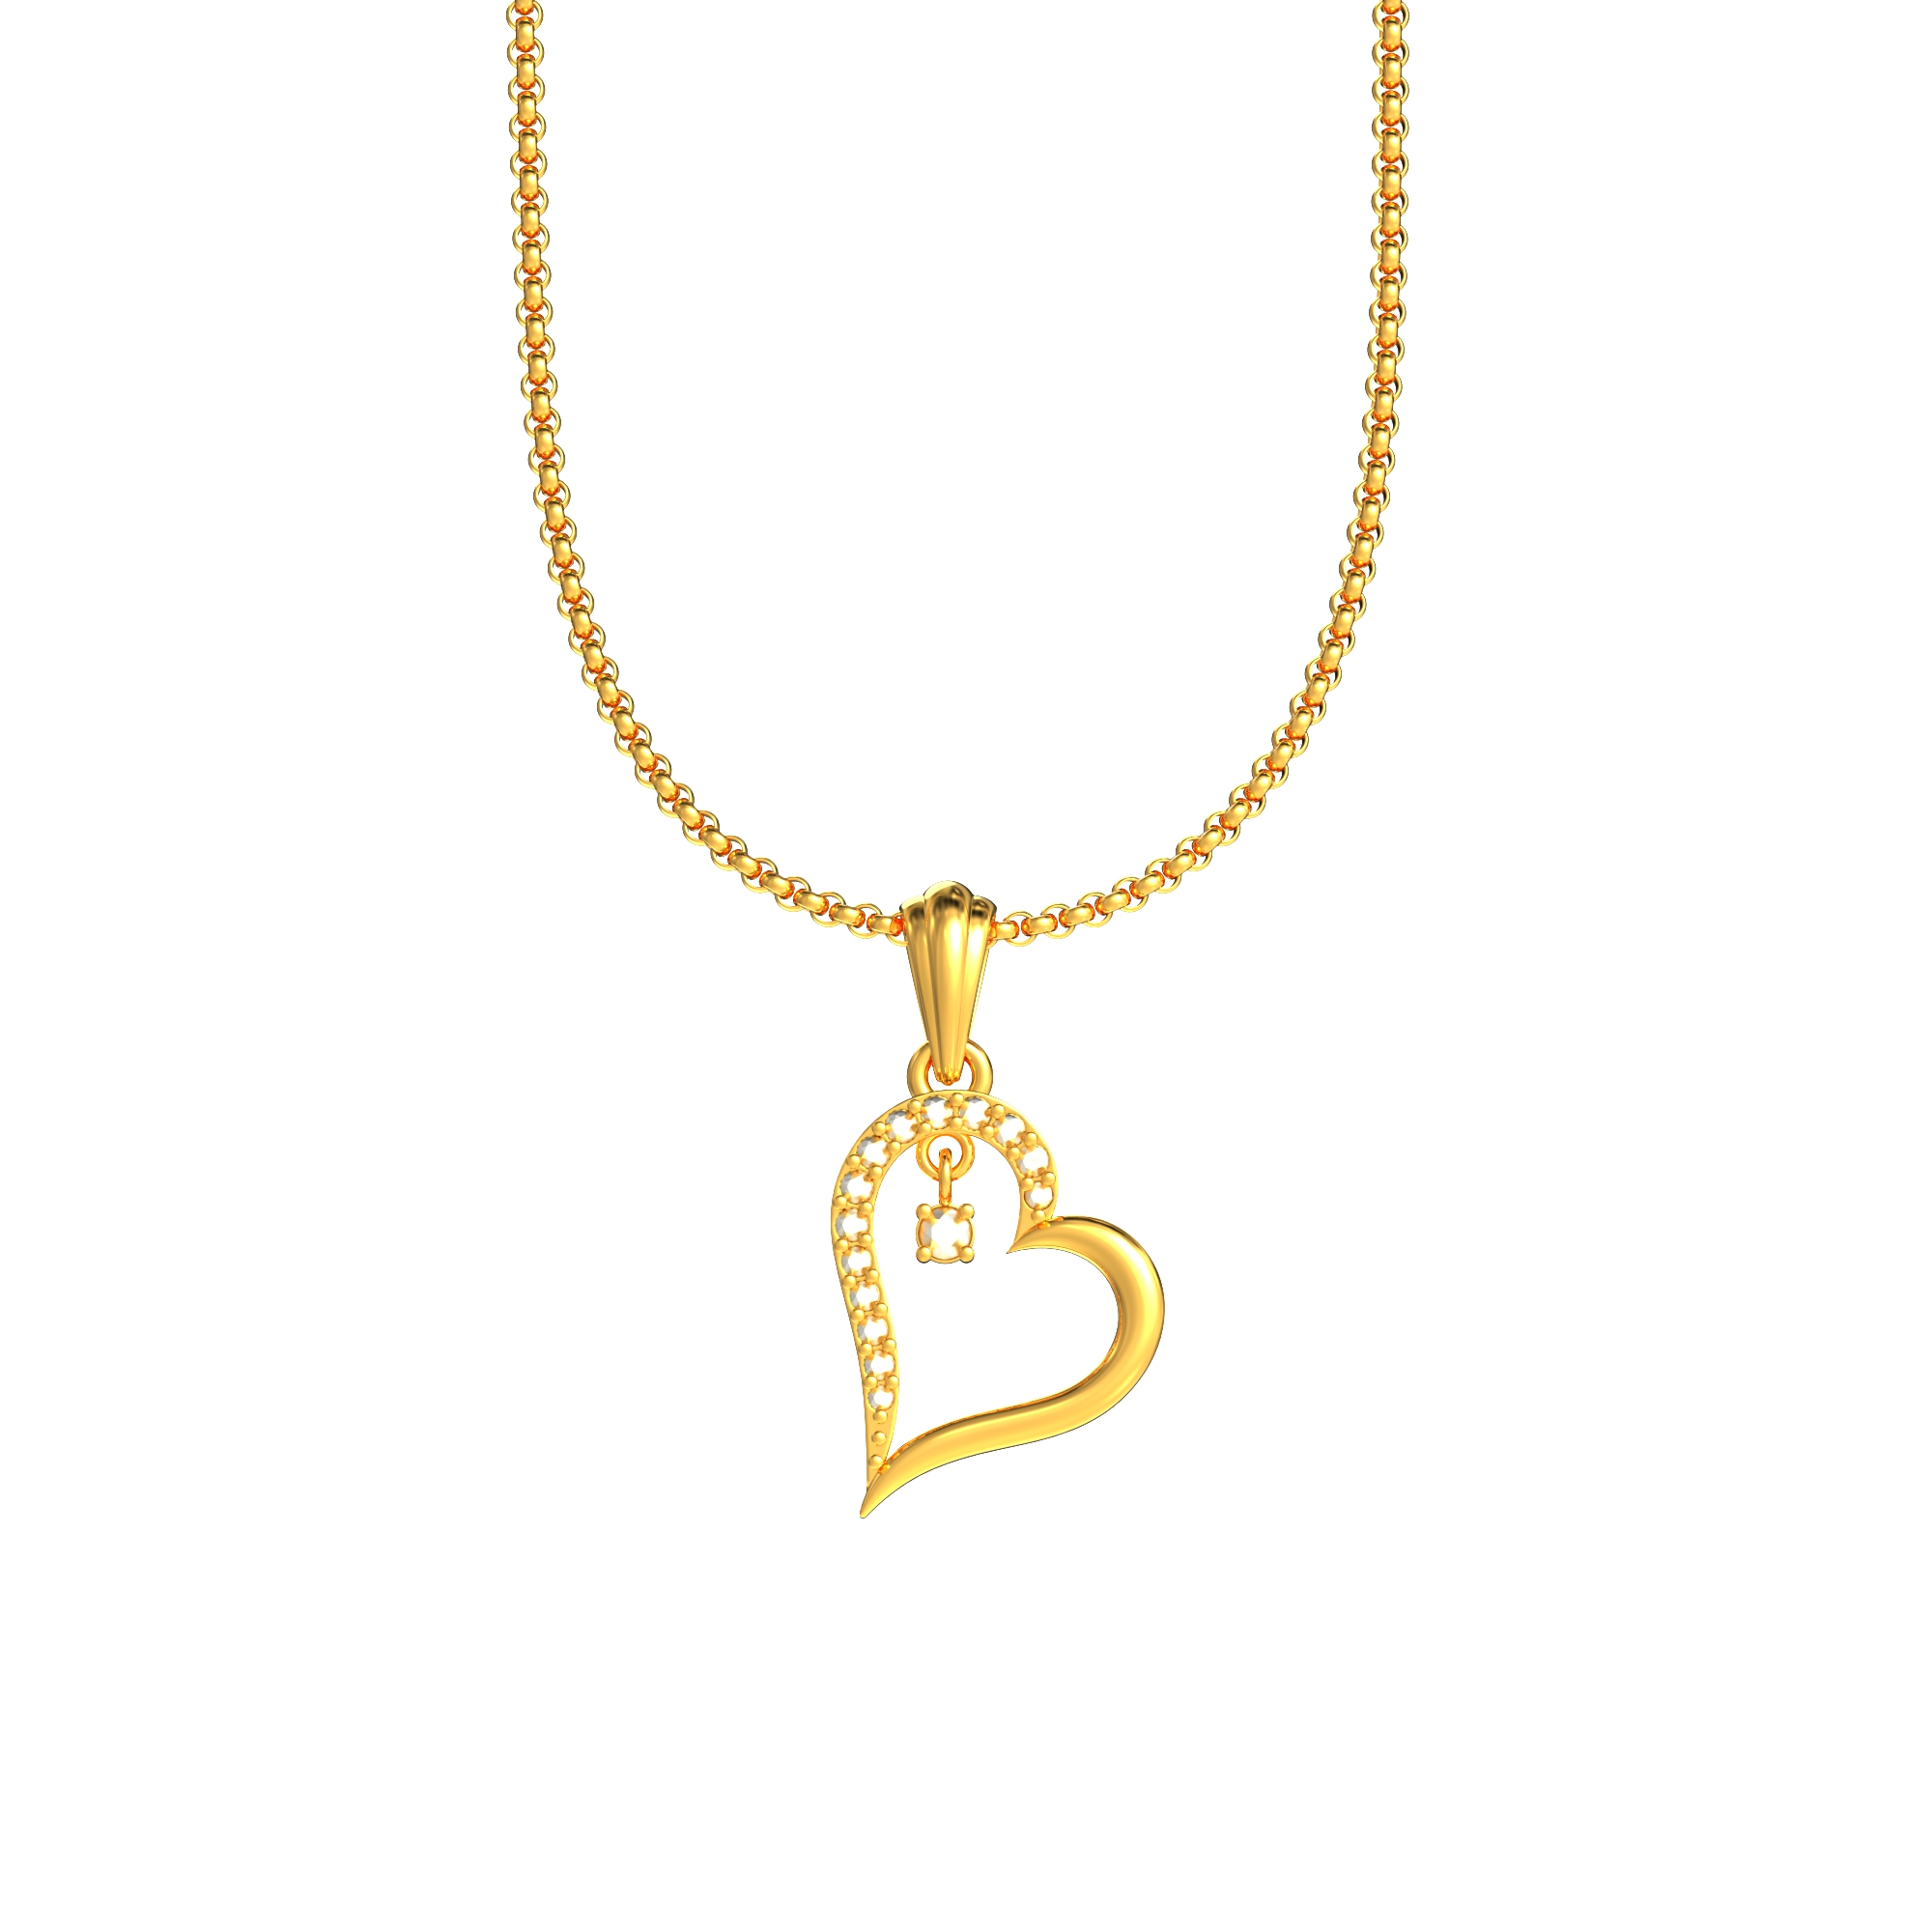 Trendy Heart Shaped Gold Pendant